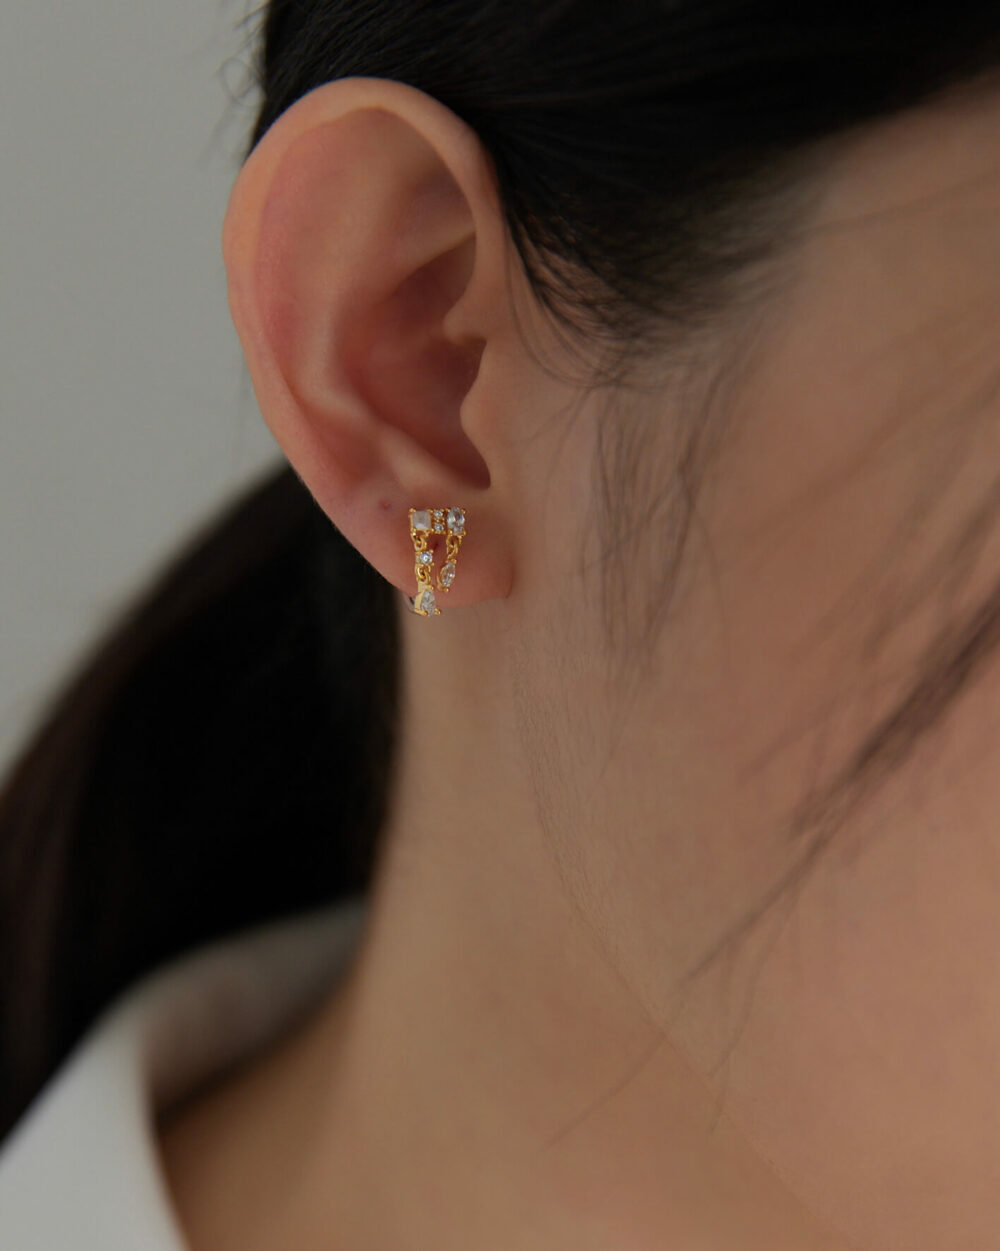 Eco安珂,韓國飾品,韓國耳環,韓國925純銀耳環,925純銀耳環,簡約耳環,貼耳耳環,氣質耳環,小耳環,耳環